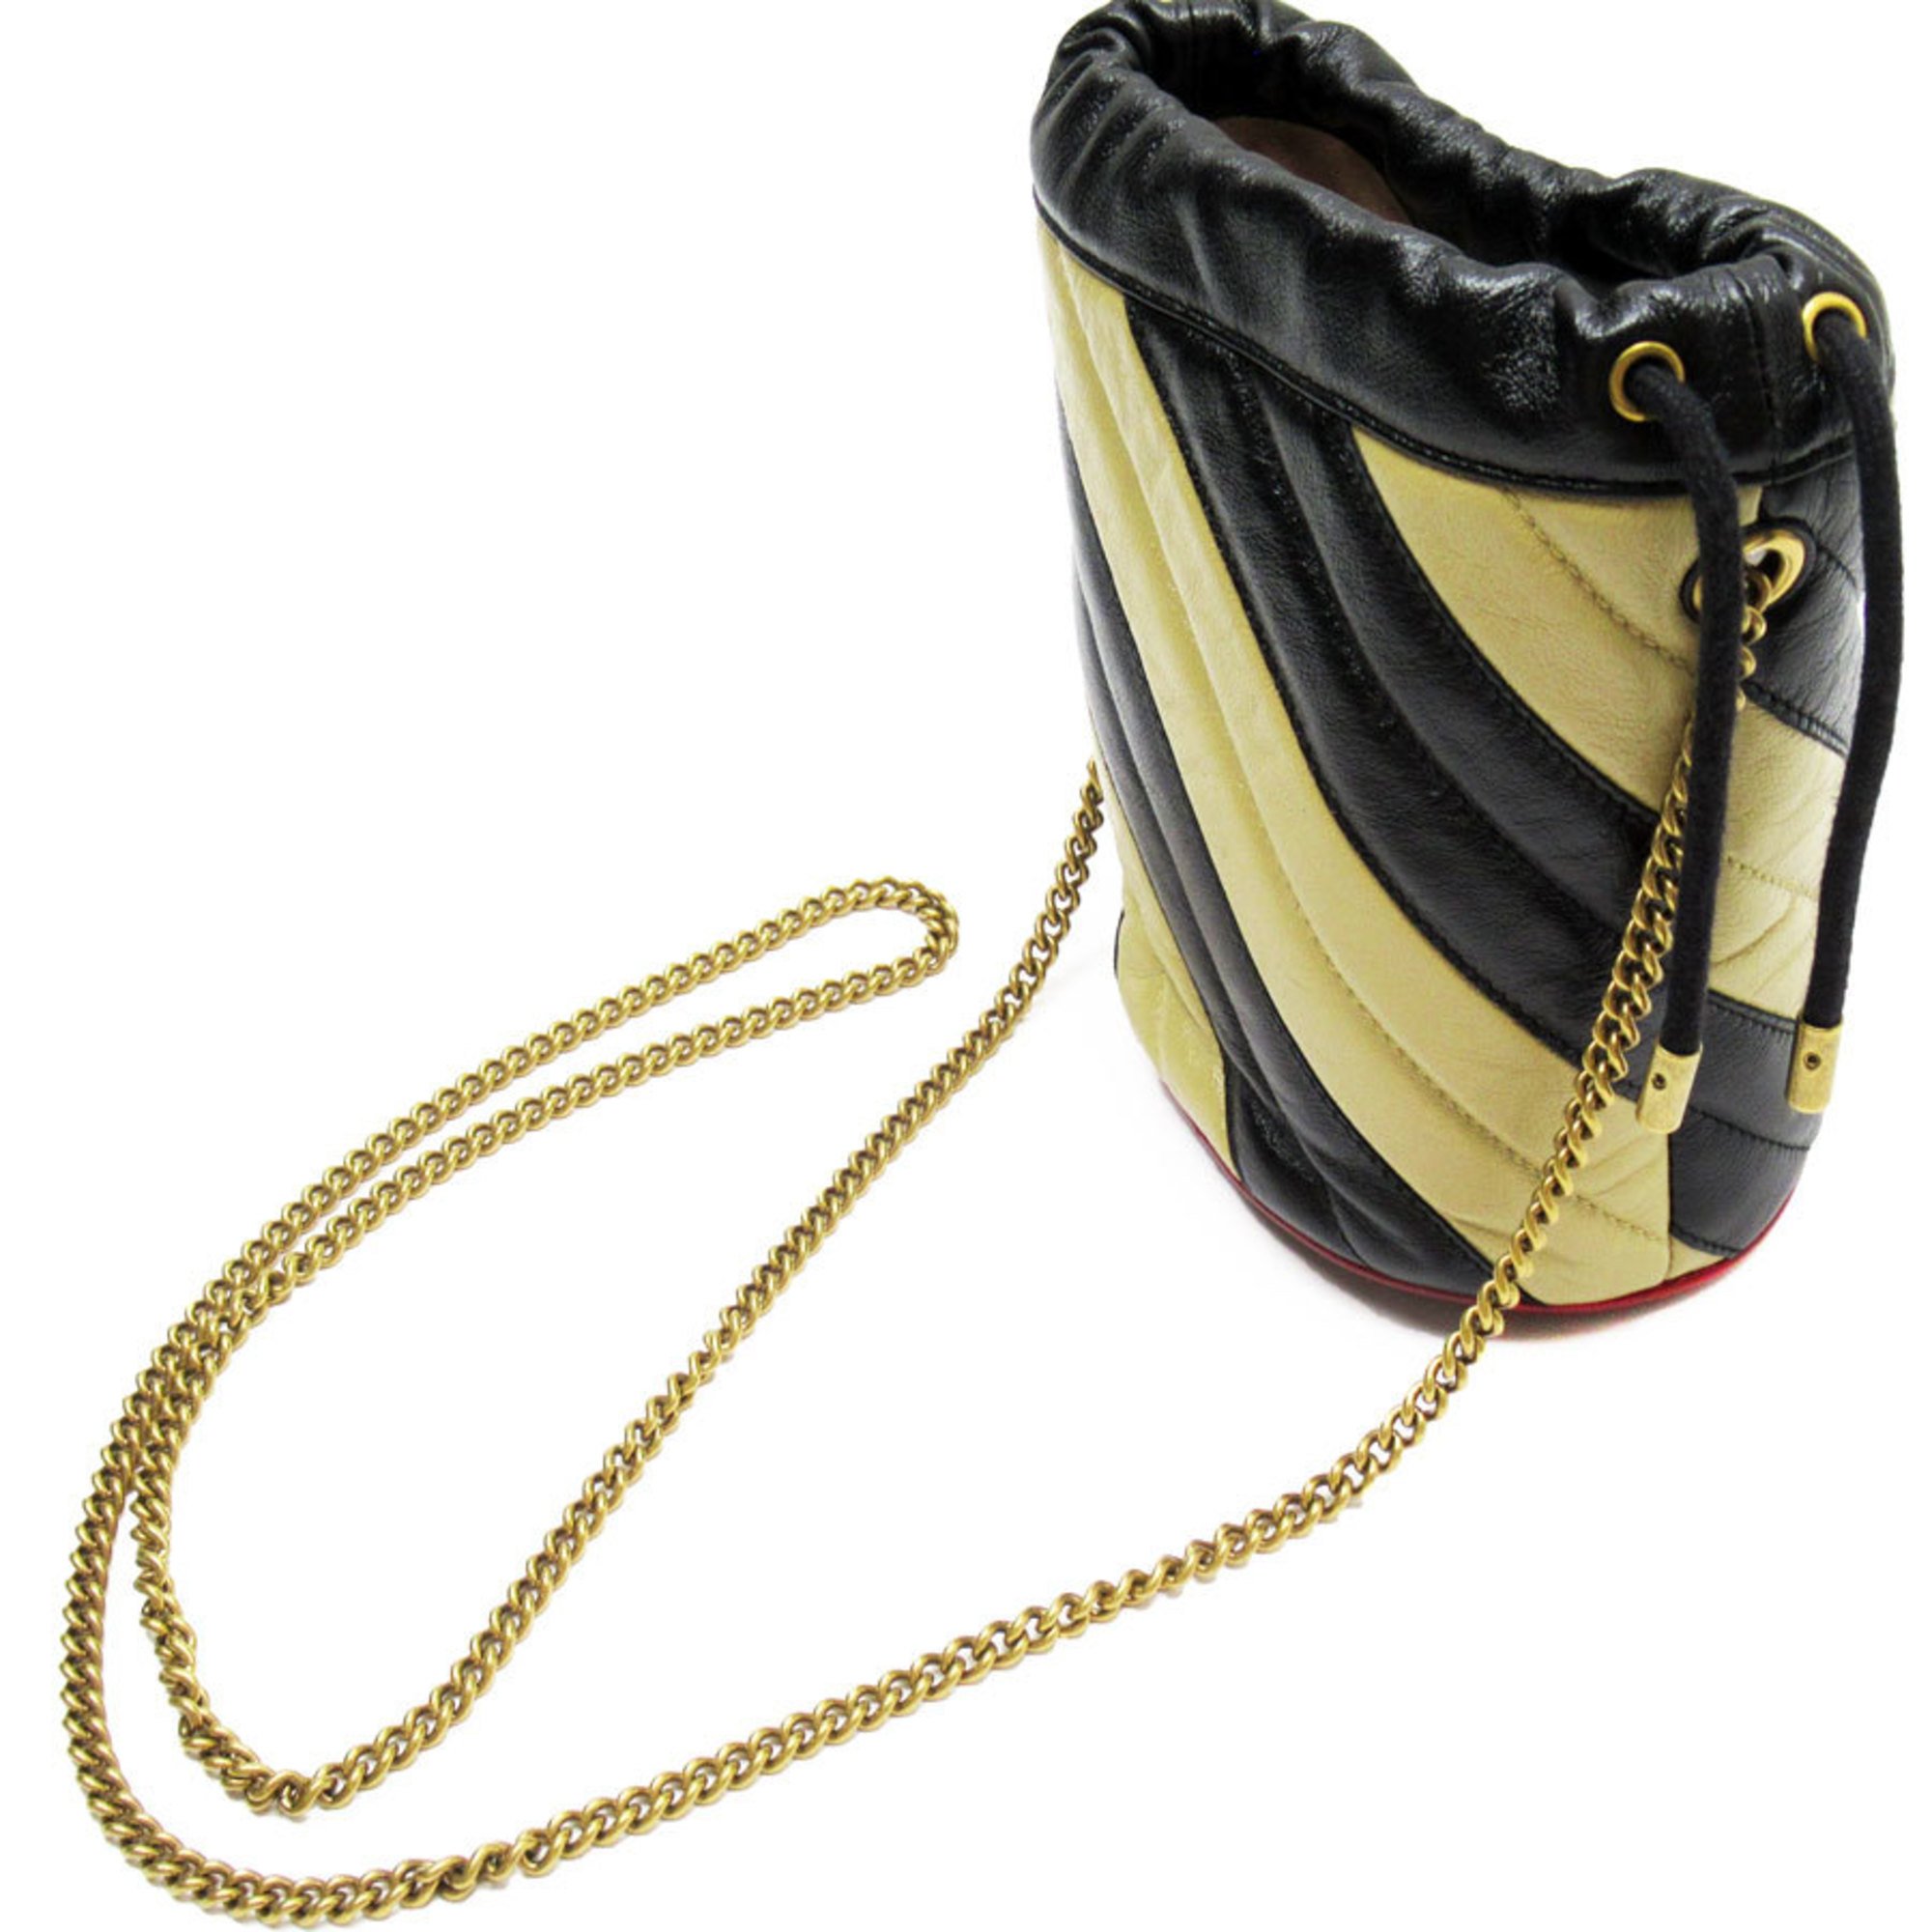 GUCCI Shoulder Bag GG Marmont Leather Black Beige Gold Women's 573817 w0510g